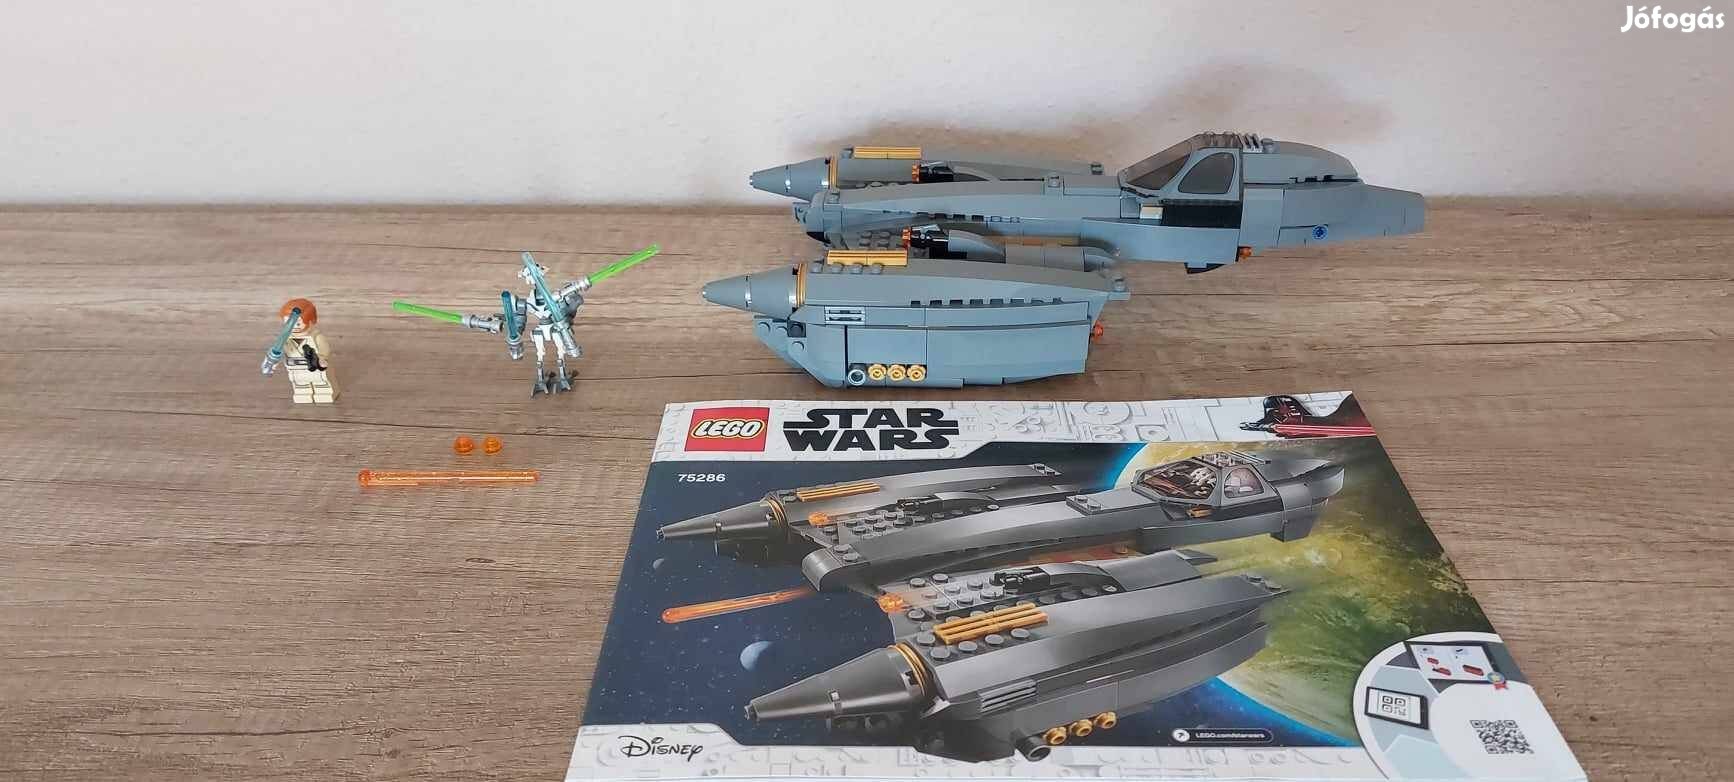 Eladó 75286, Grievous tábornok Starfighter,LEGO Star Wars